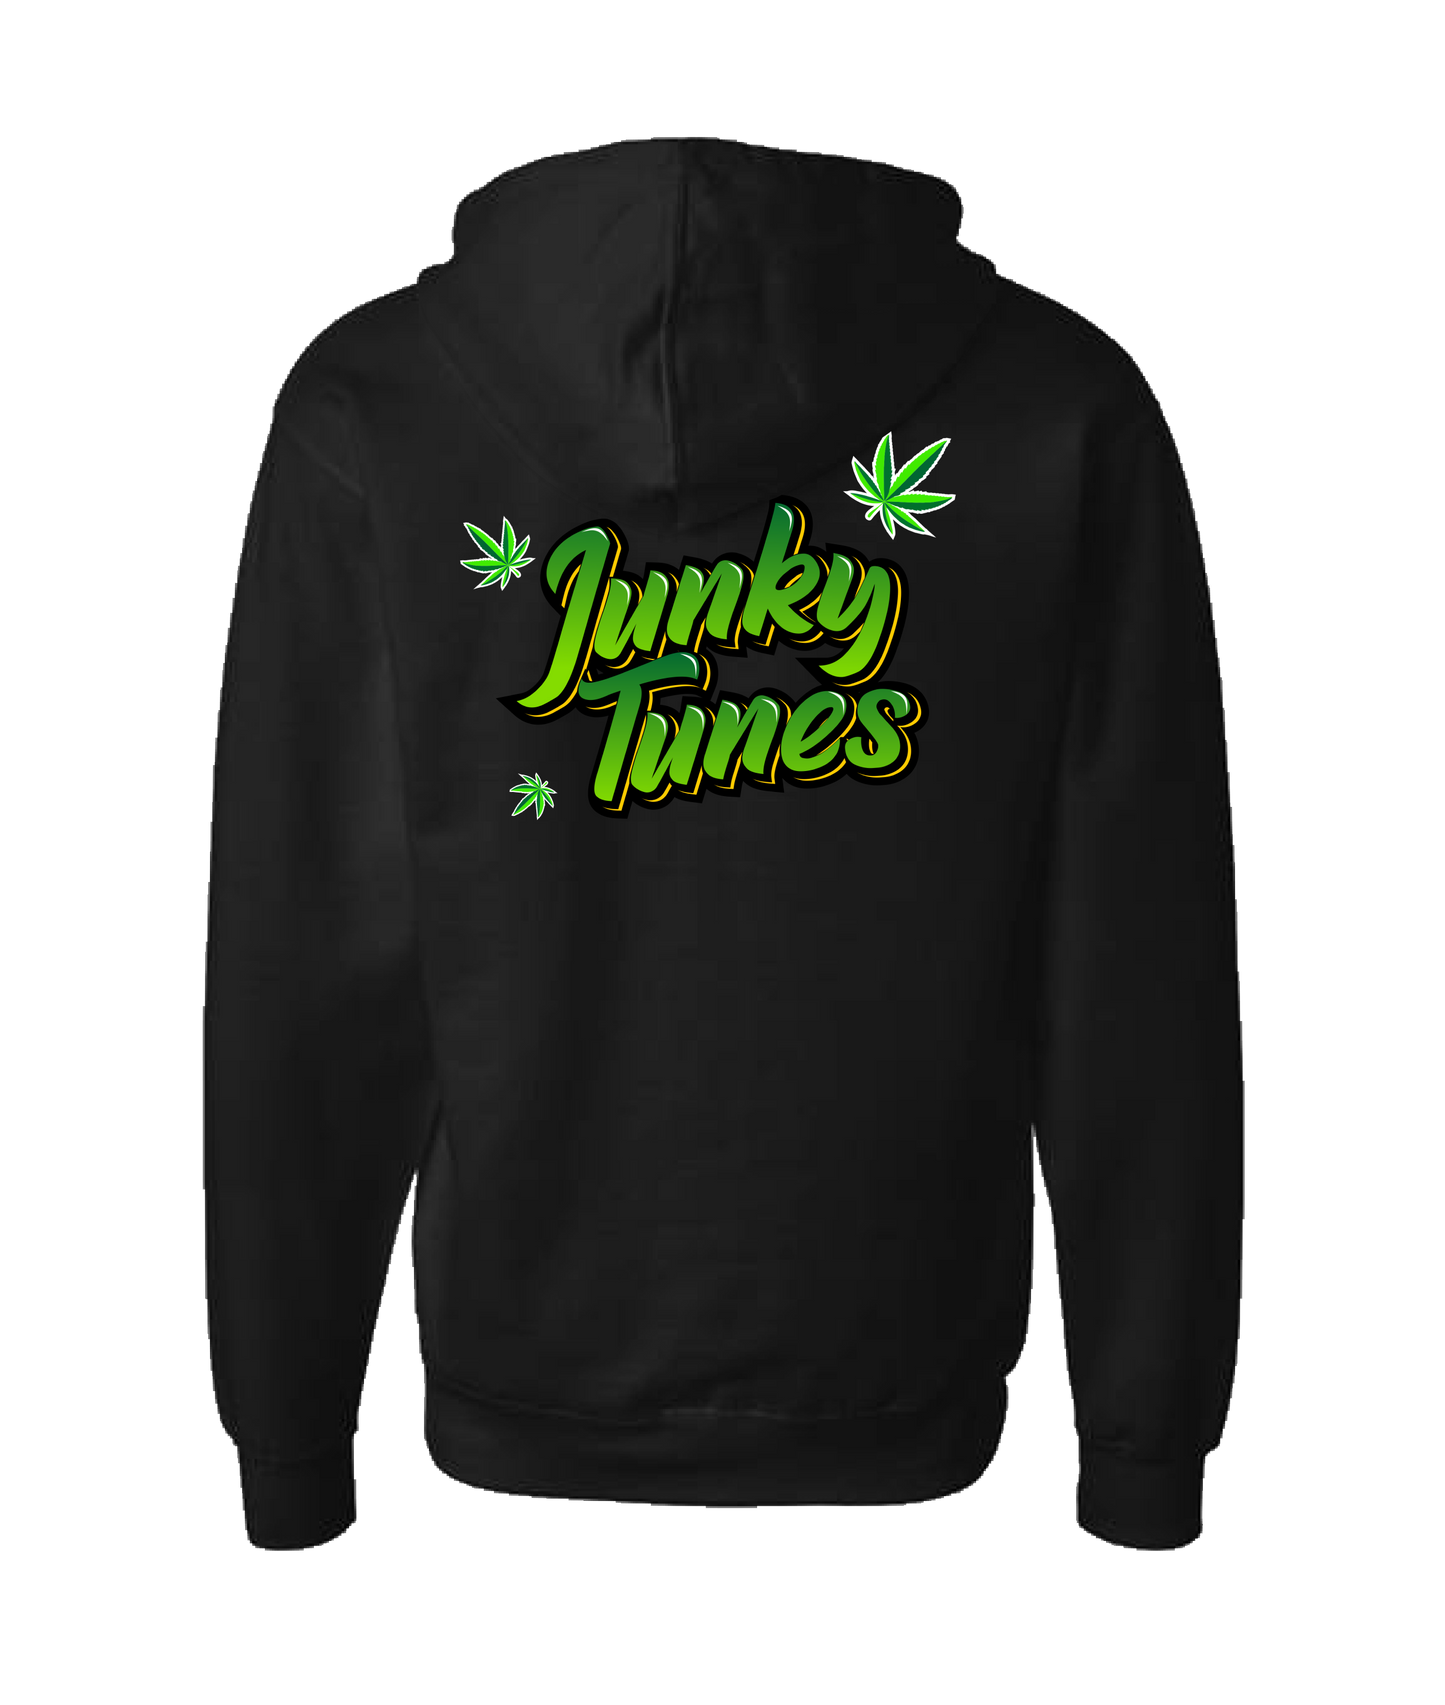 JunkyTunes - Logo Green - Black Zip Up Hoodie